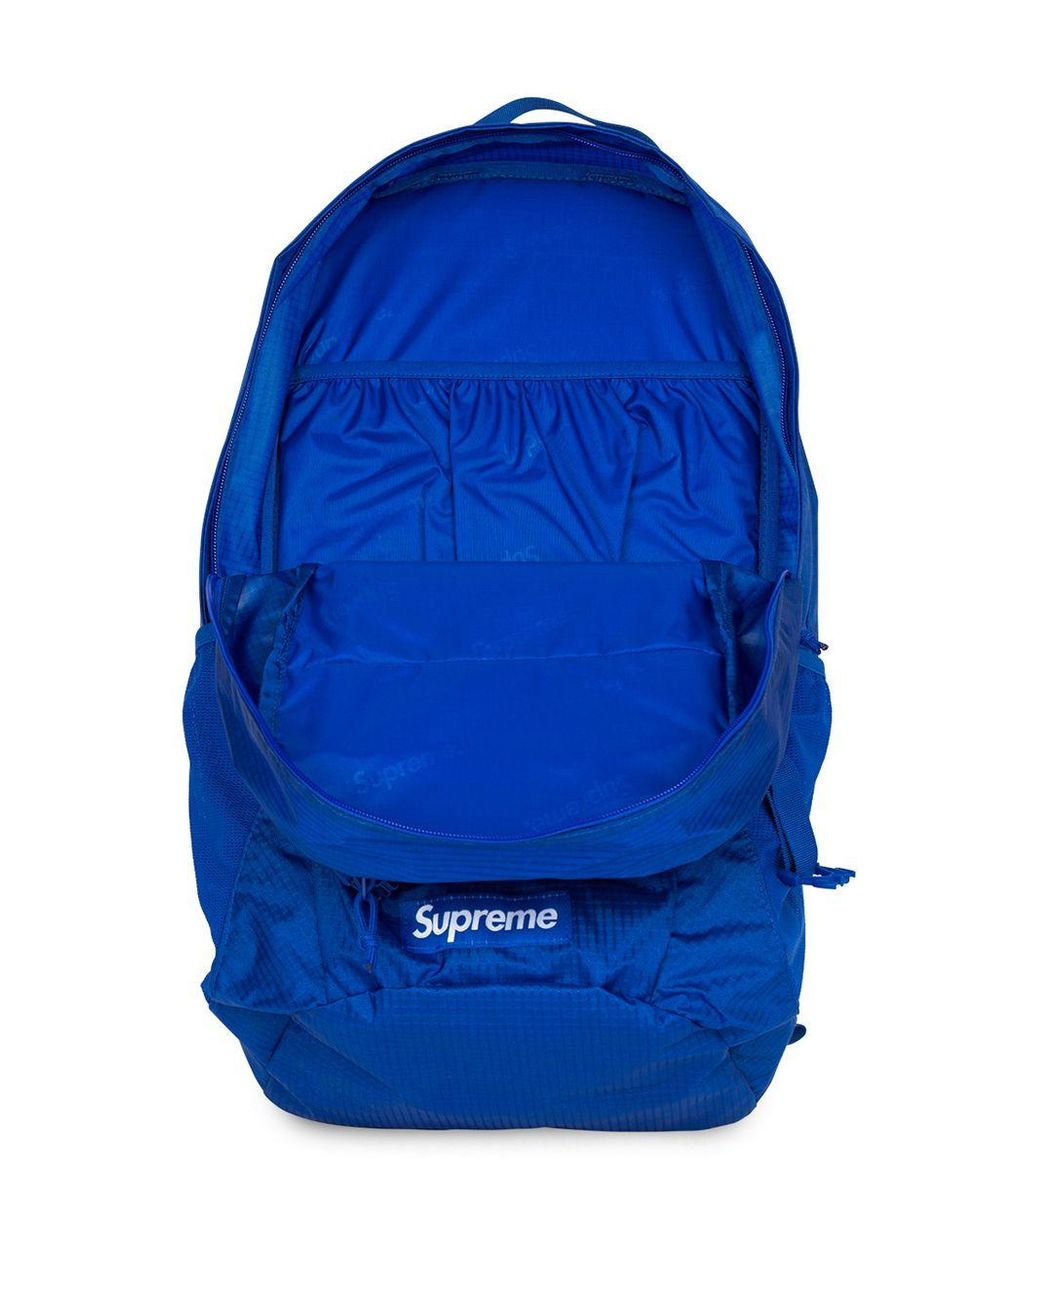 Supreme Logo Duffle Bag SS 21 - Farfetch